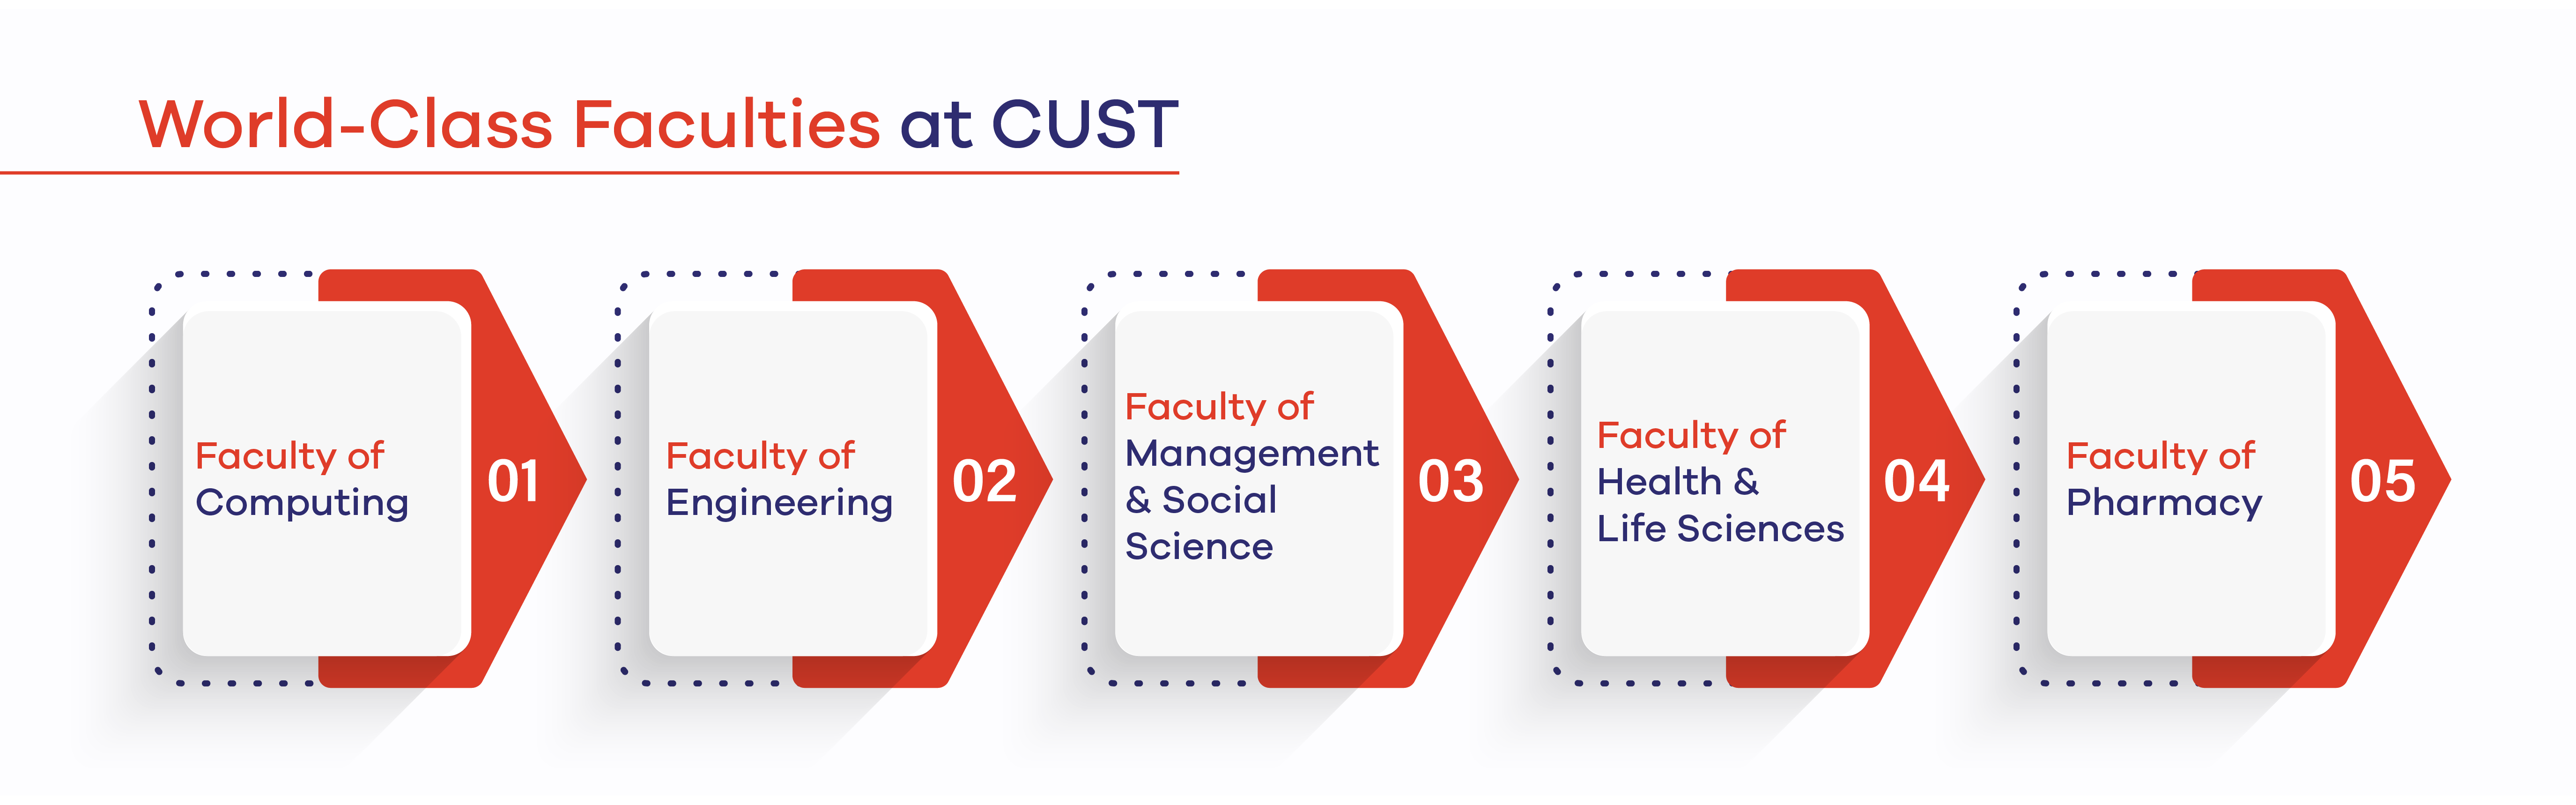 World-Class Faculties at CUST